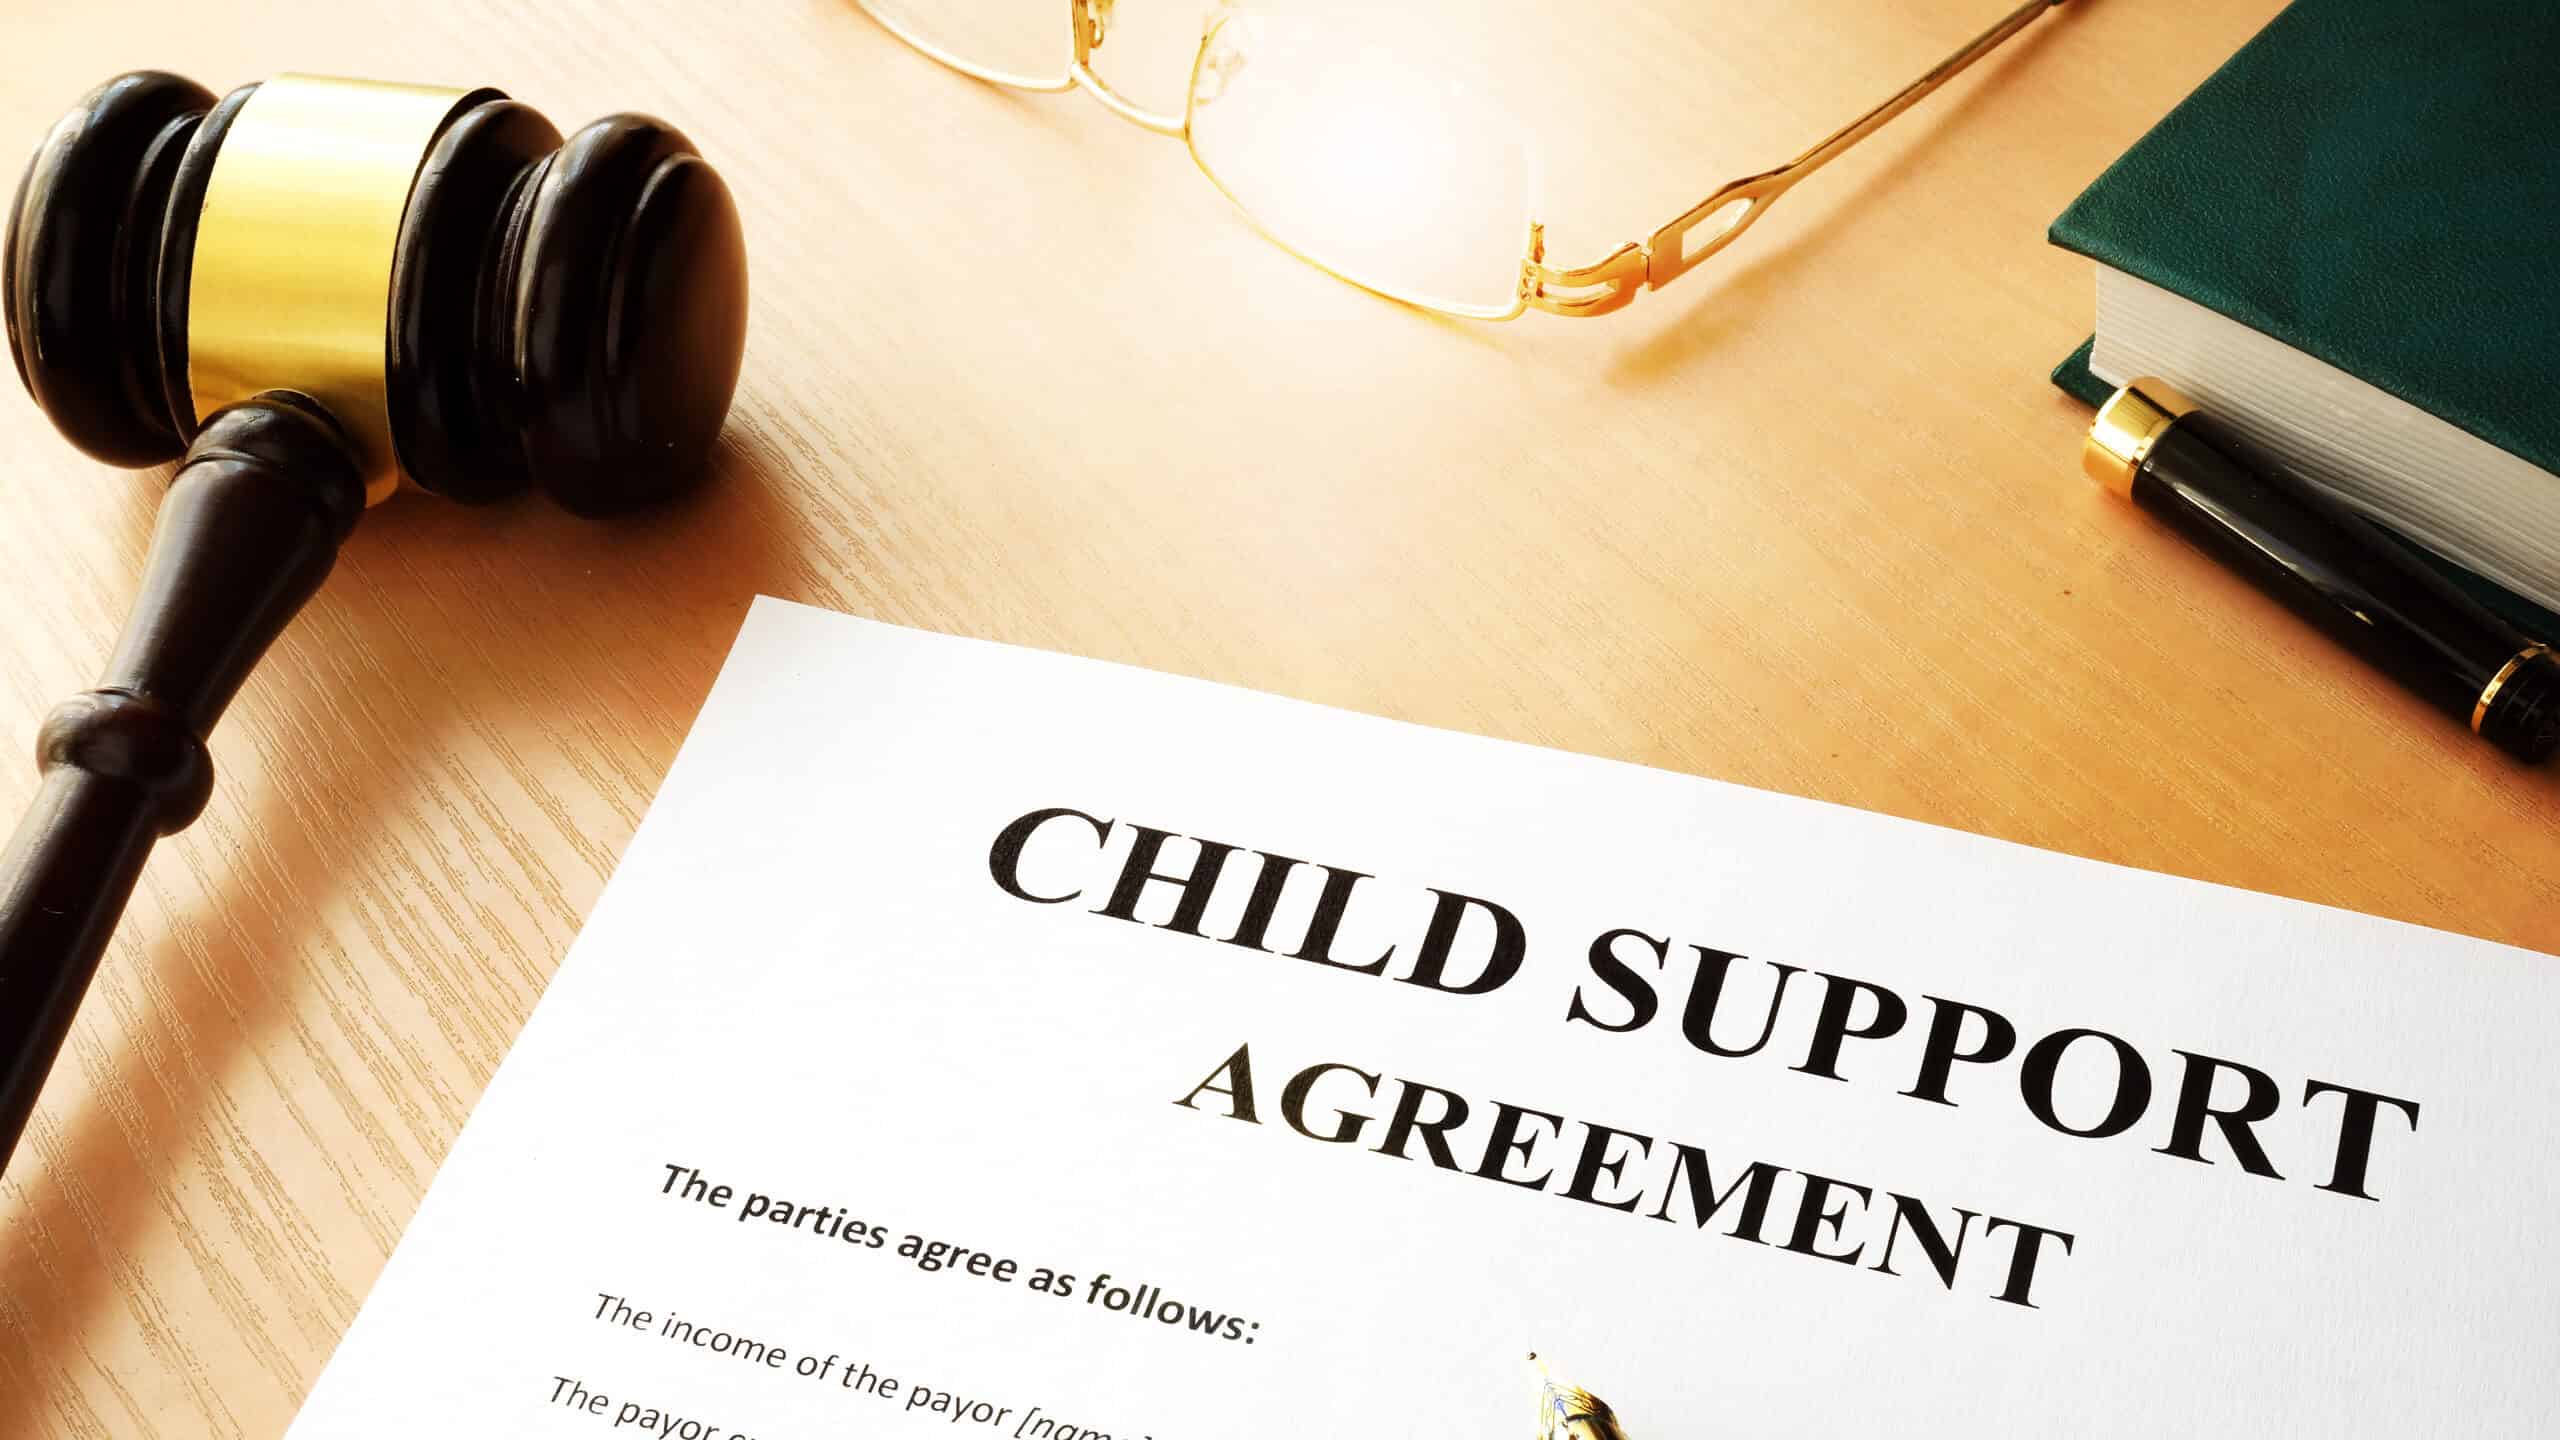 Child support document